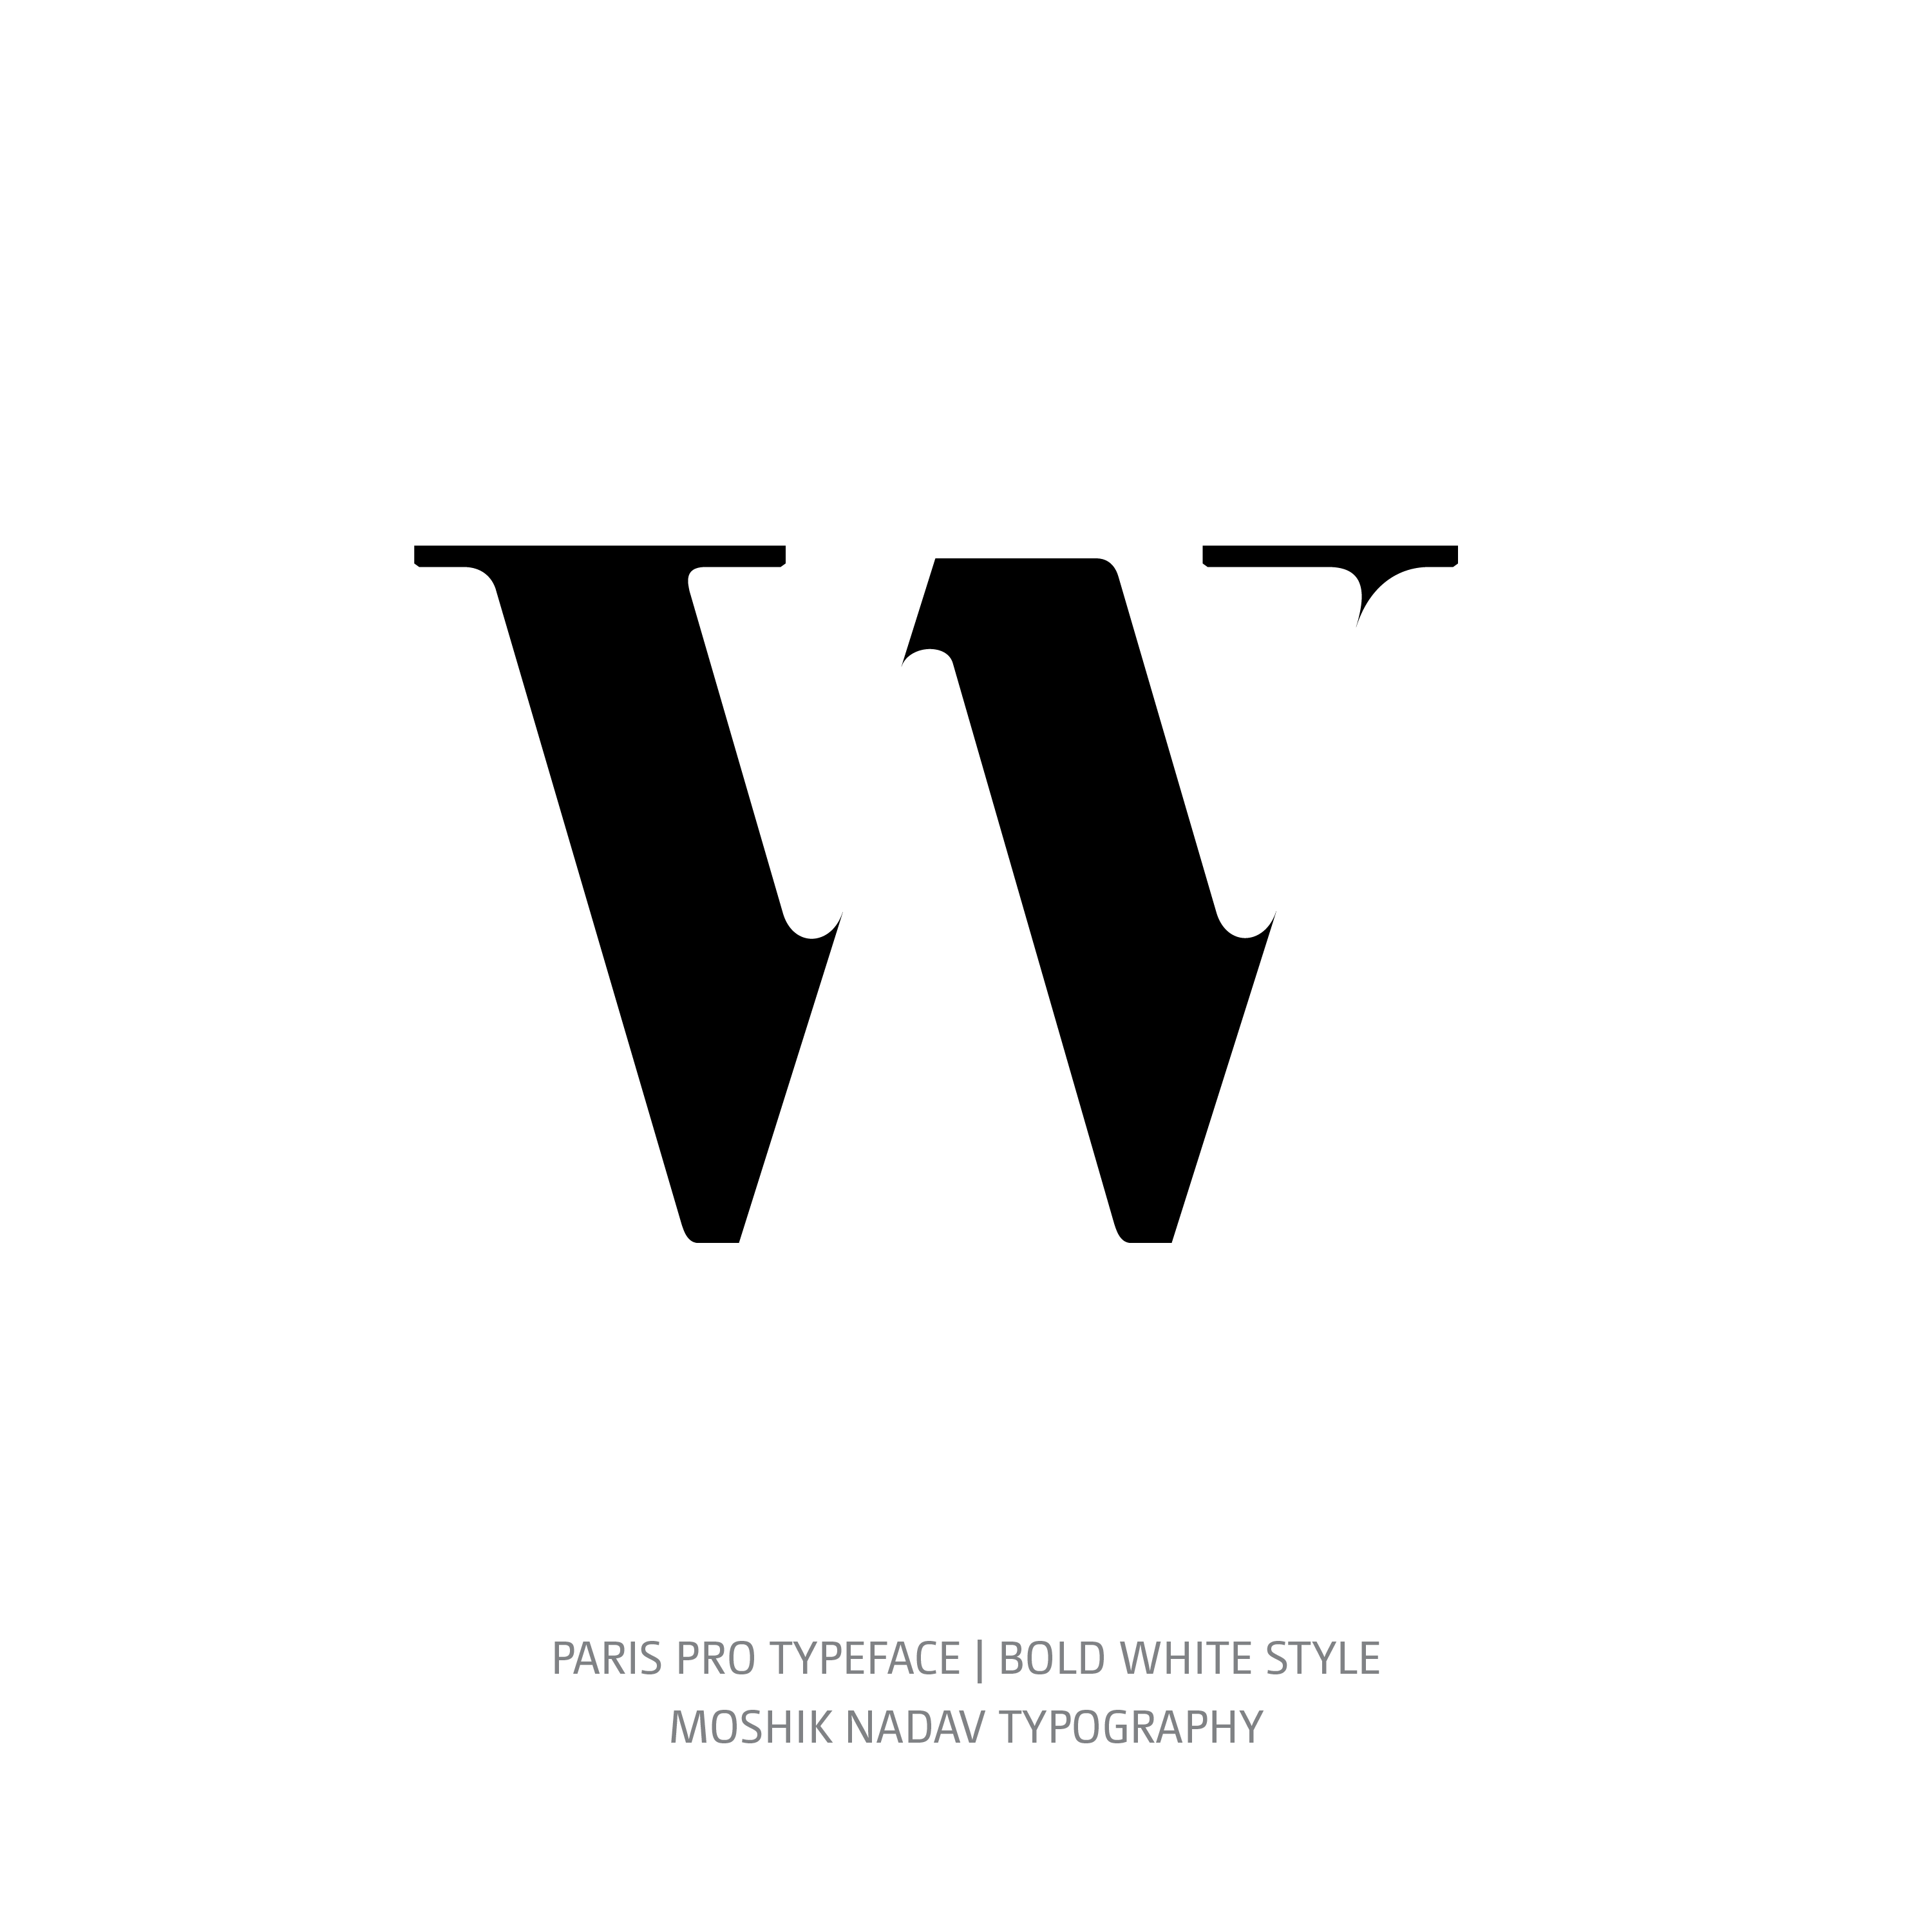 Paris Pro Typeface Bold White w